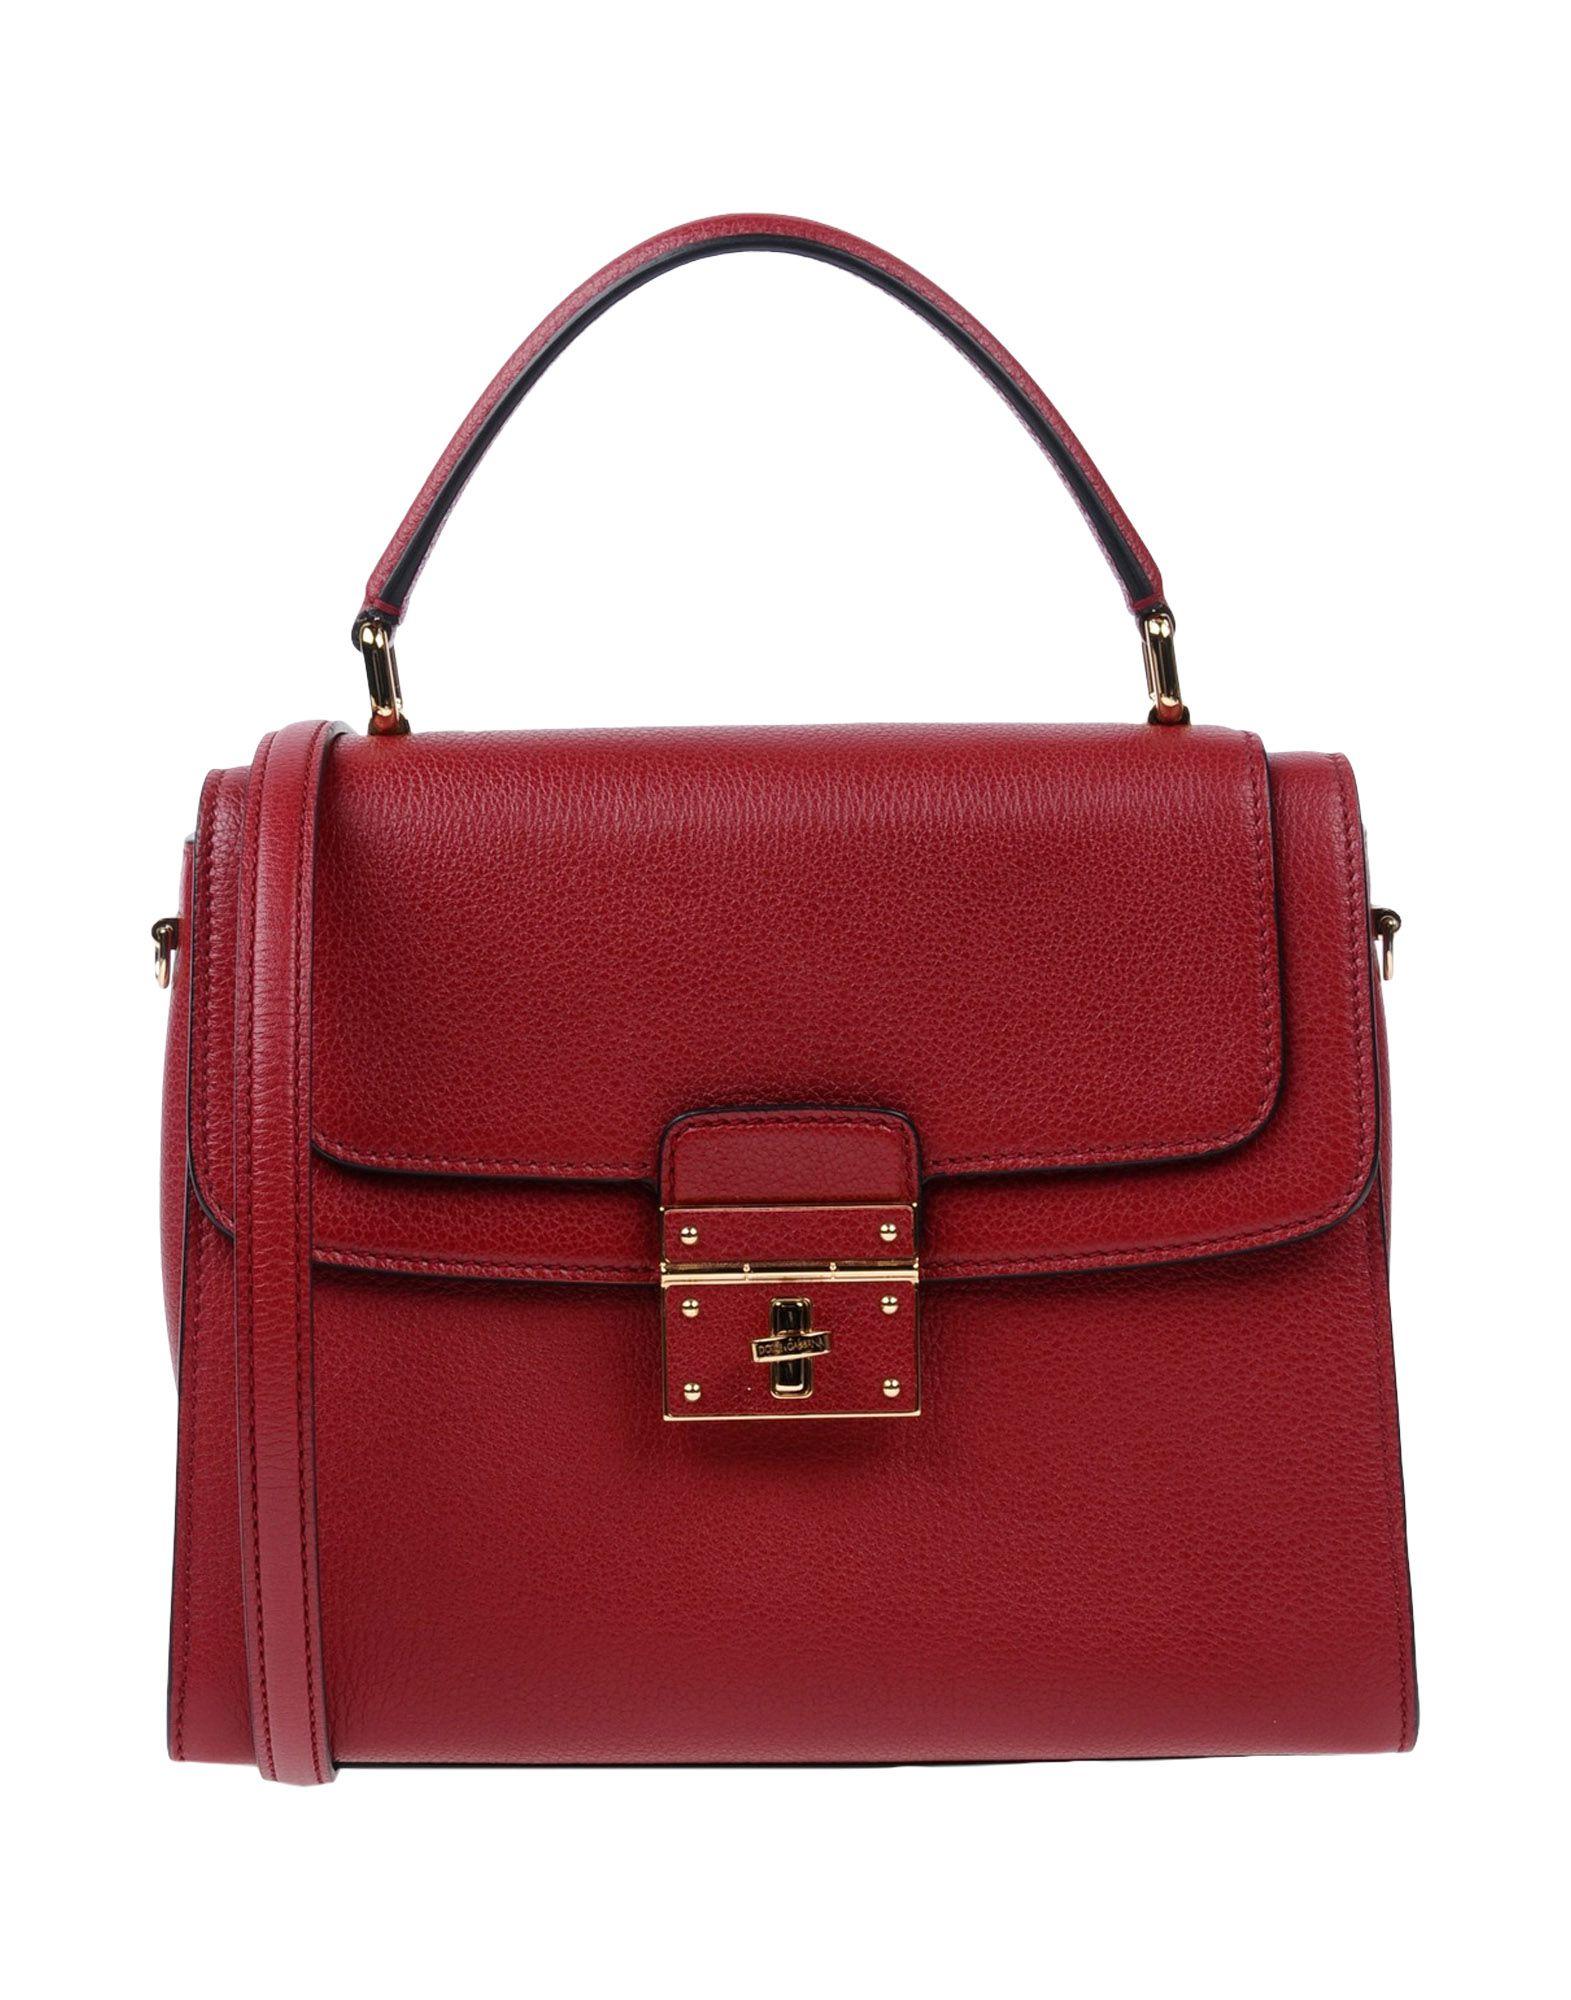 Dolce & Gabbana Handbags In Maroon | ModeSens